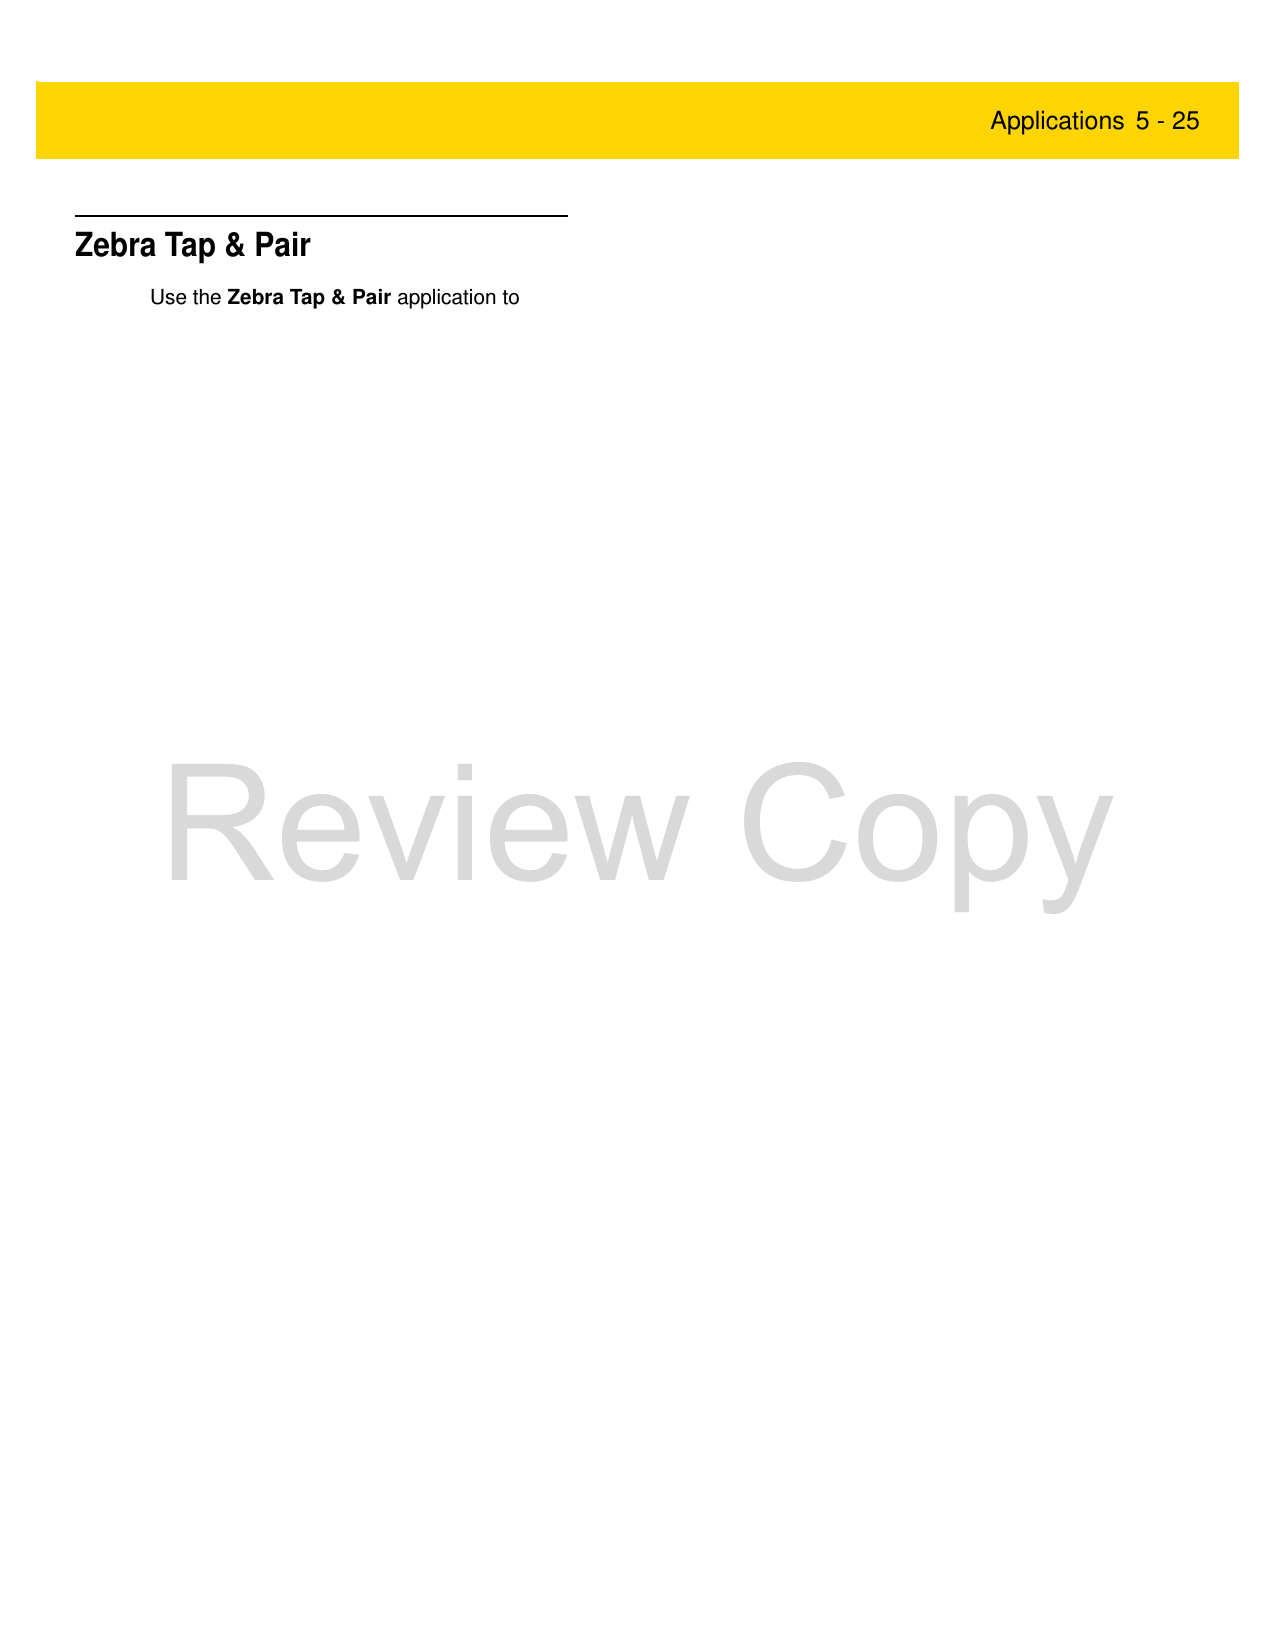 Applications 5 - 25Zebra Tap &amp; PairUse the Zebra Tap &amp; Pair application to Review Copy